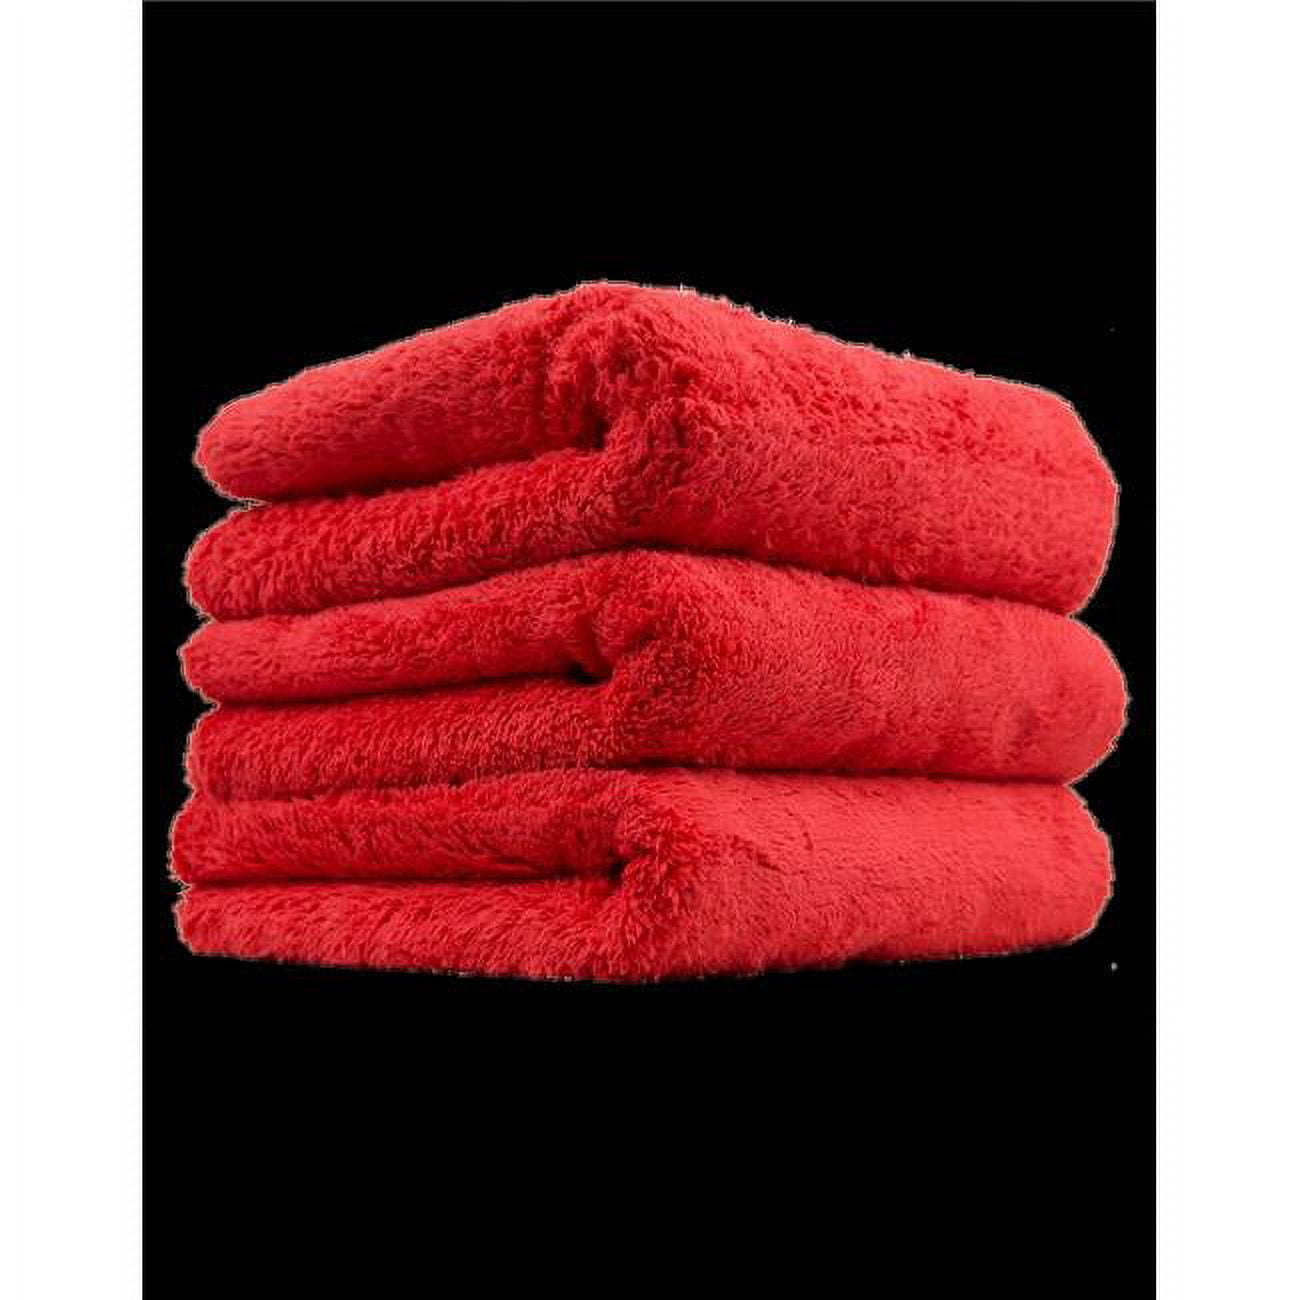 Rapid Dry Towels - The Finisher/Biker - (15.5x27.5in) Microfiber